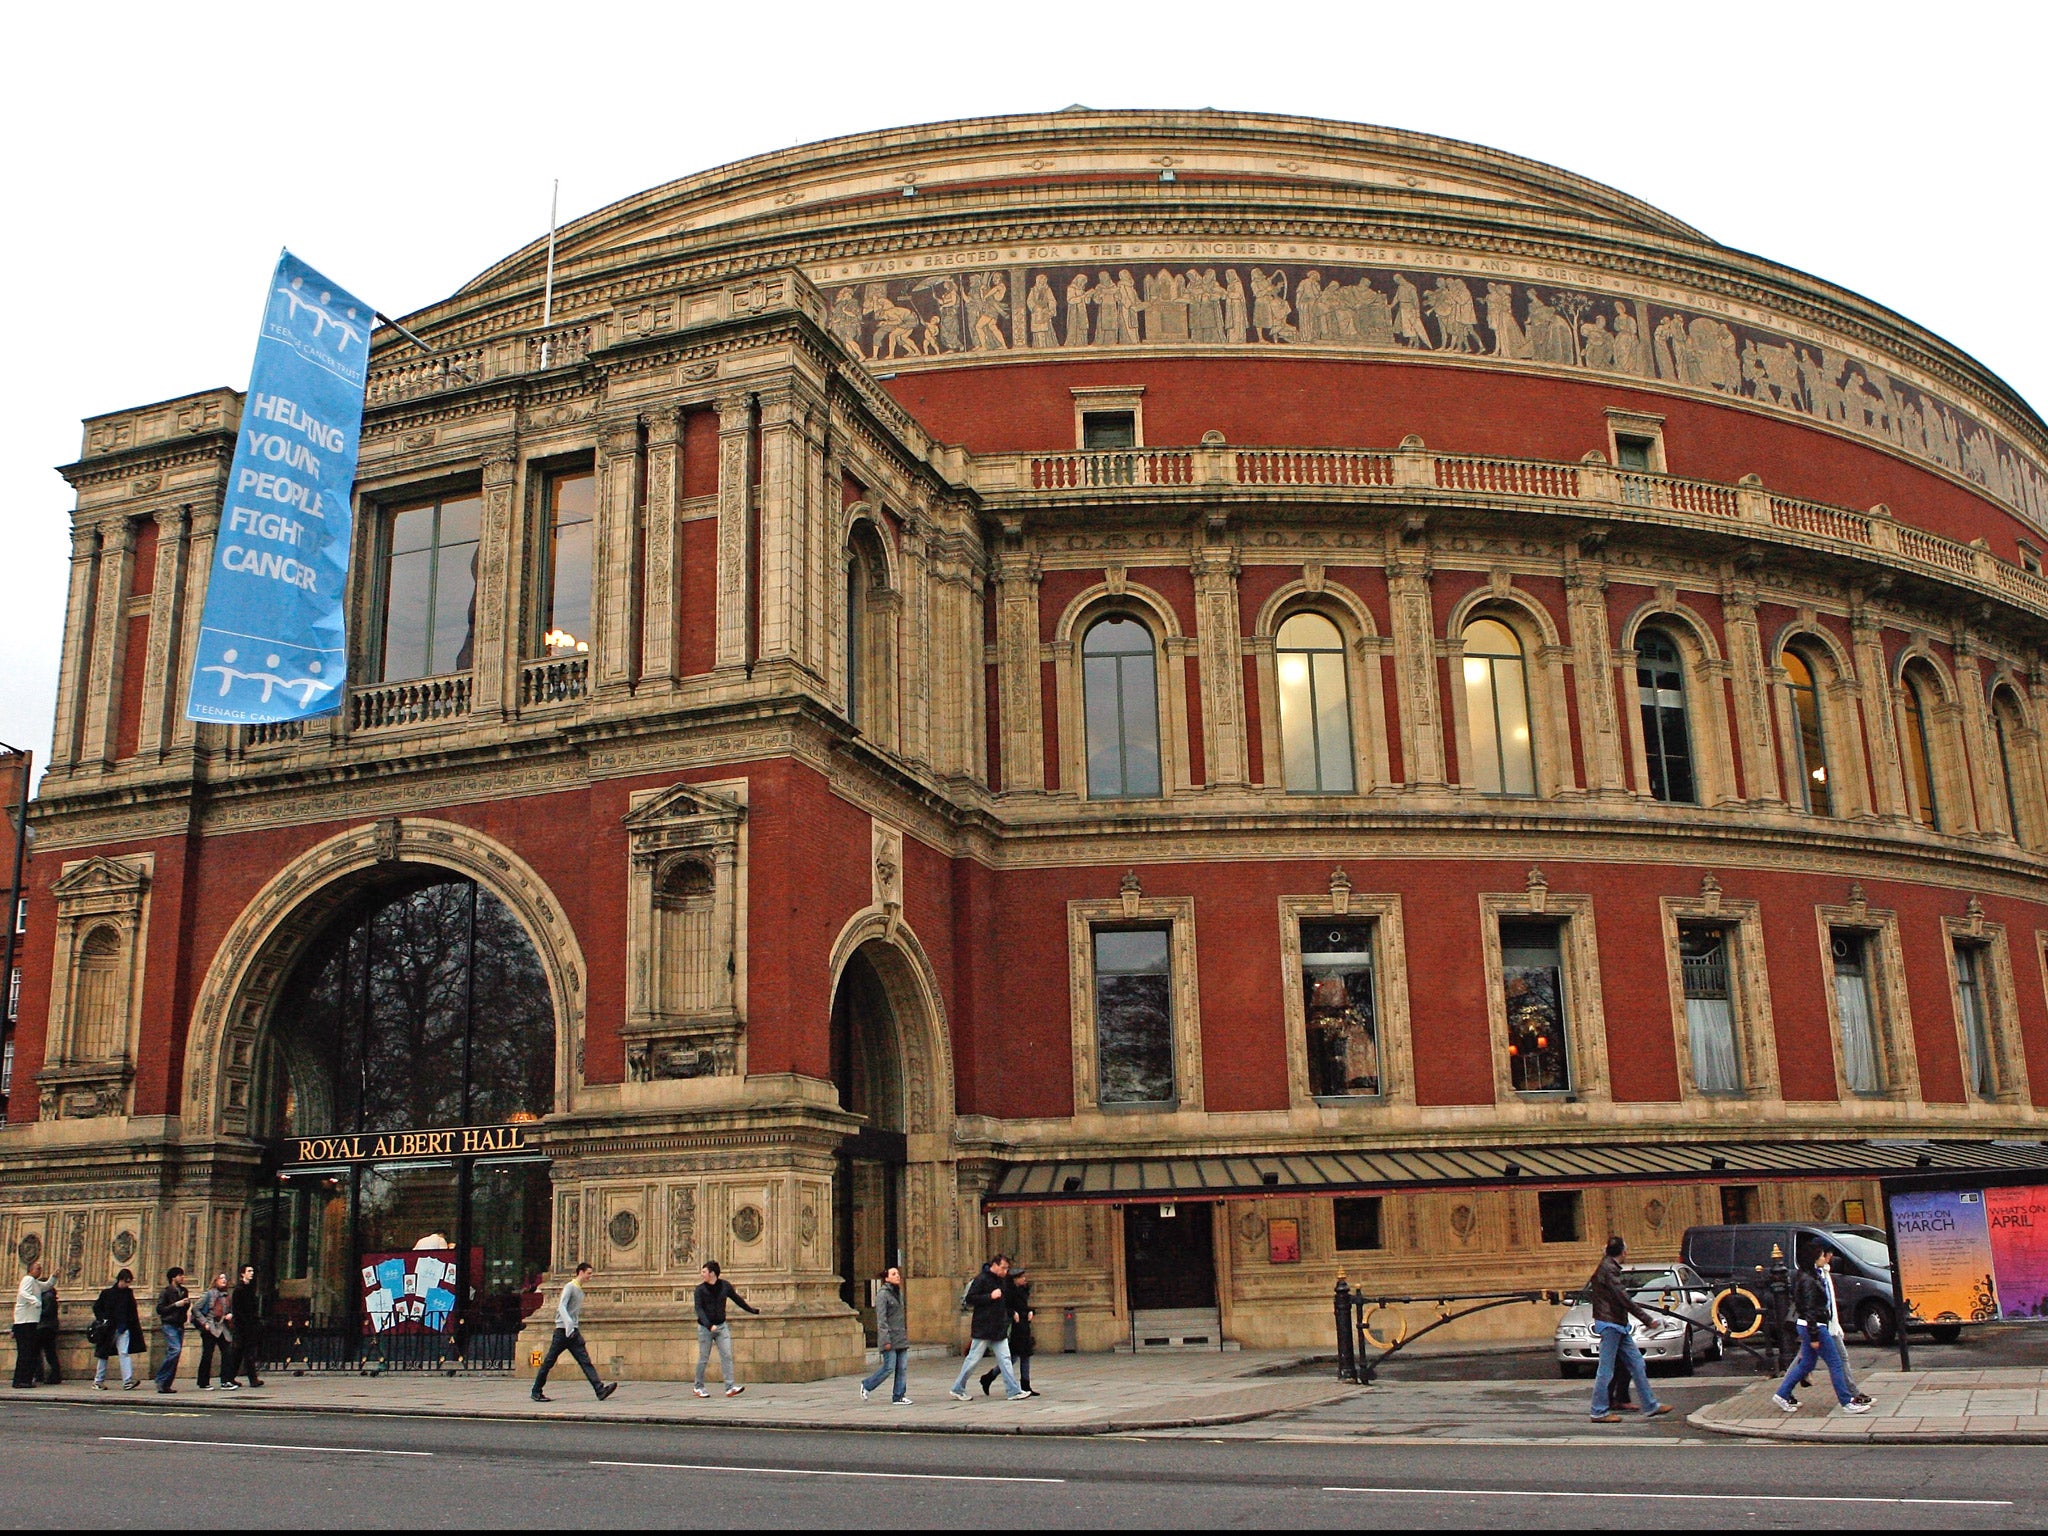 London's iconic Royal Albert Hall